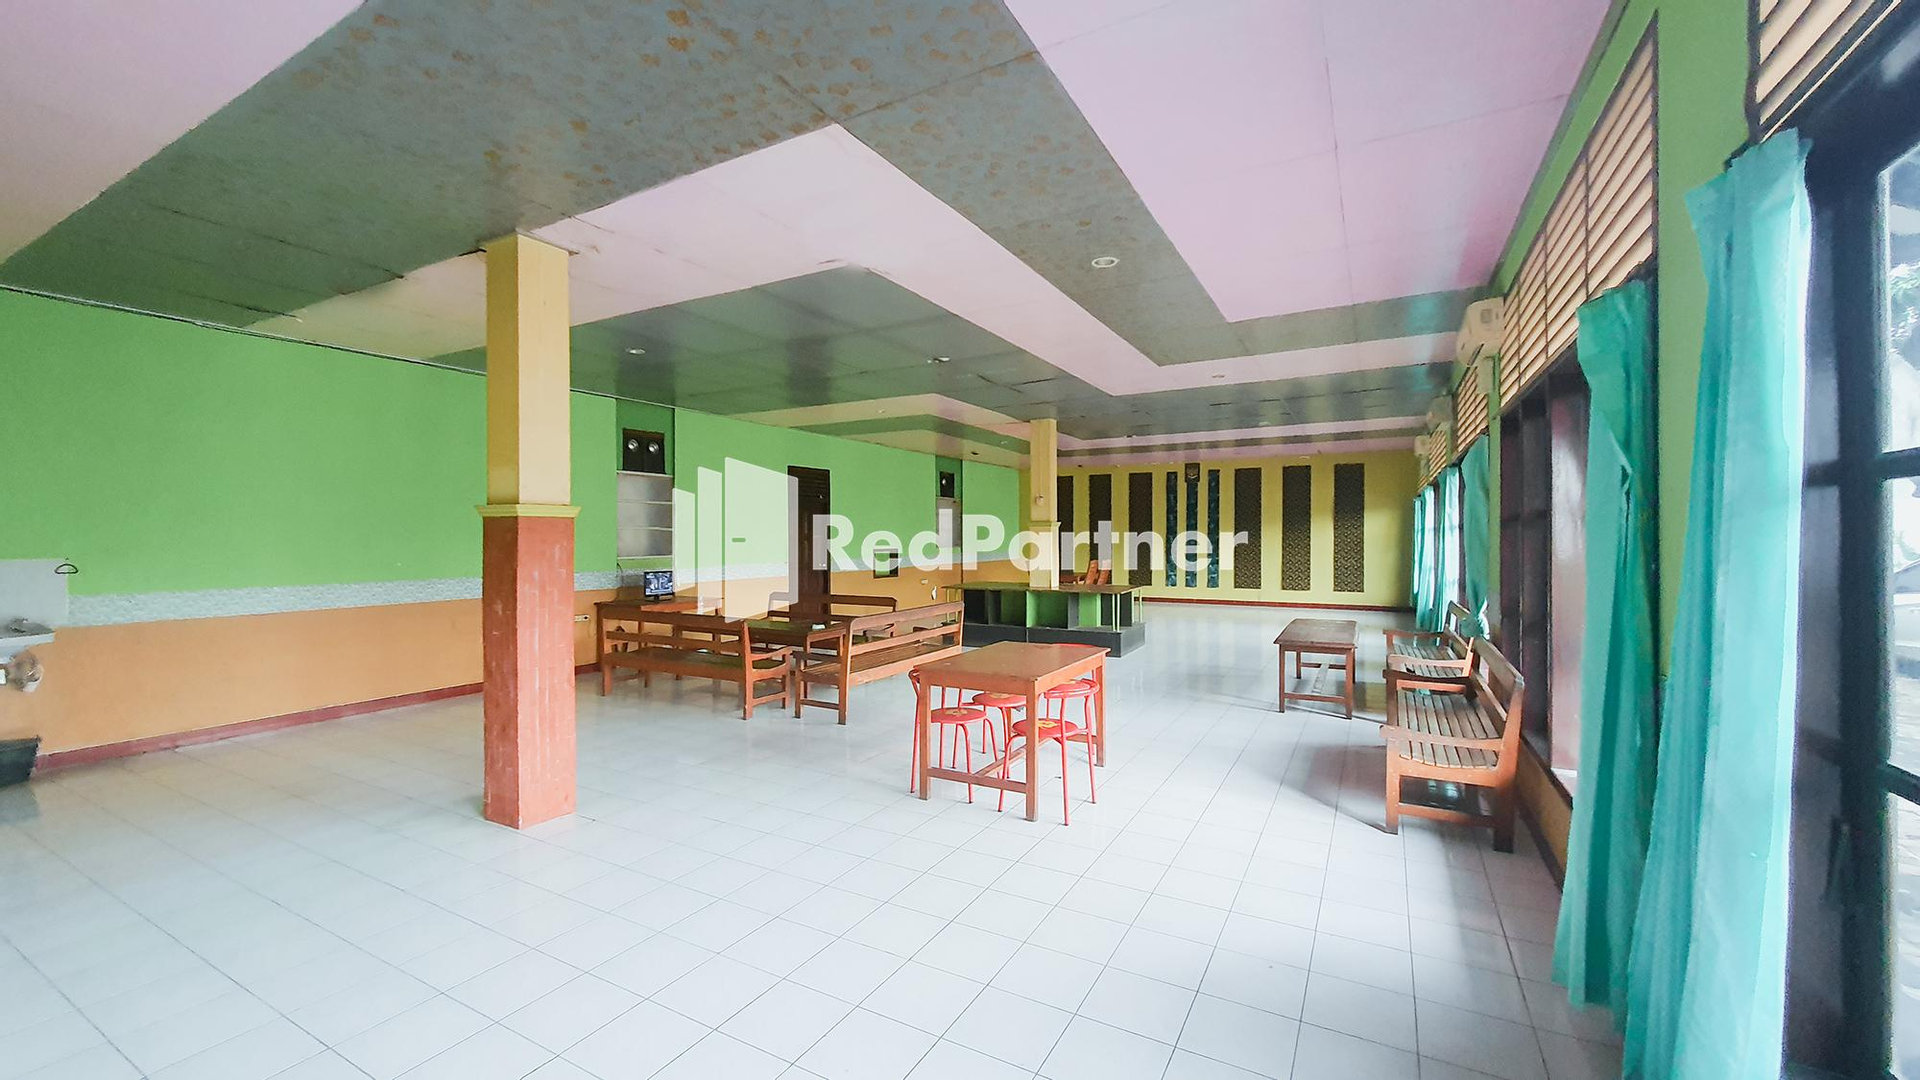 Others 3, Hotel Pondok Indah RedPartner, Madiun